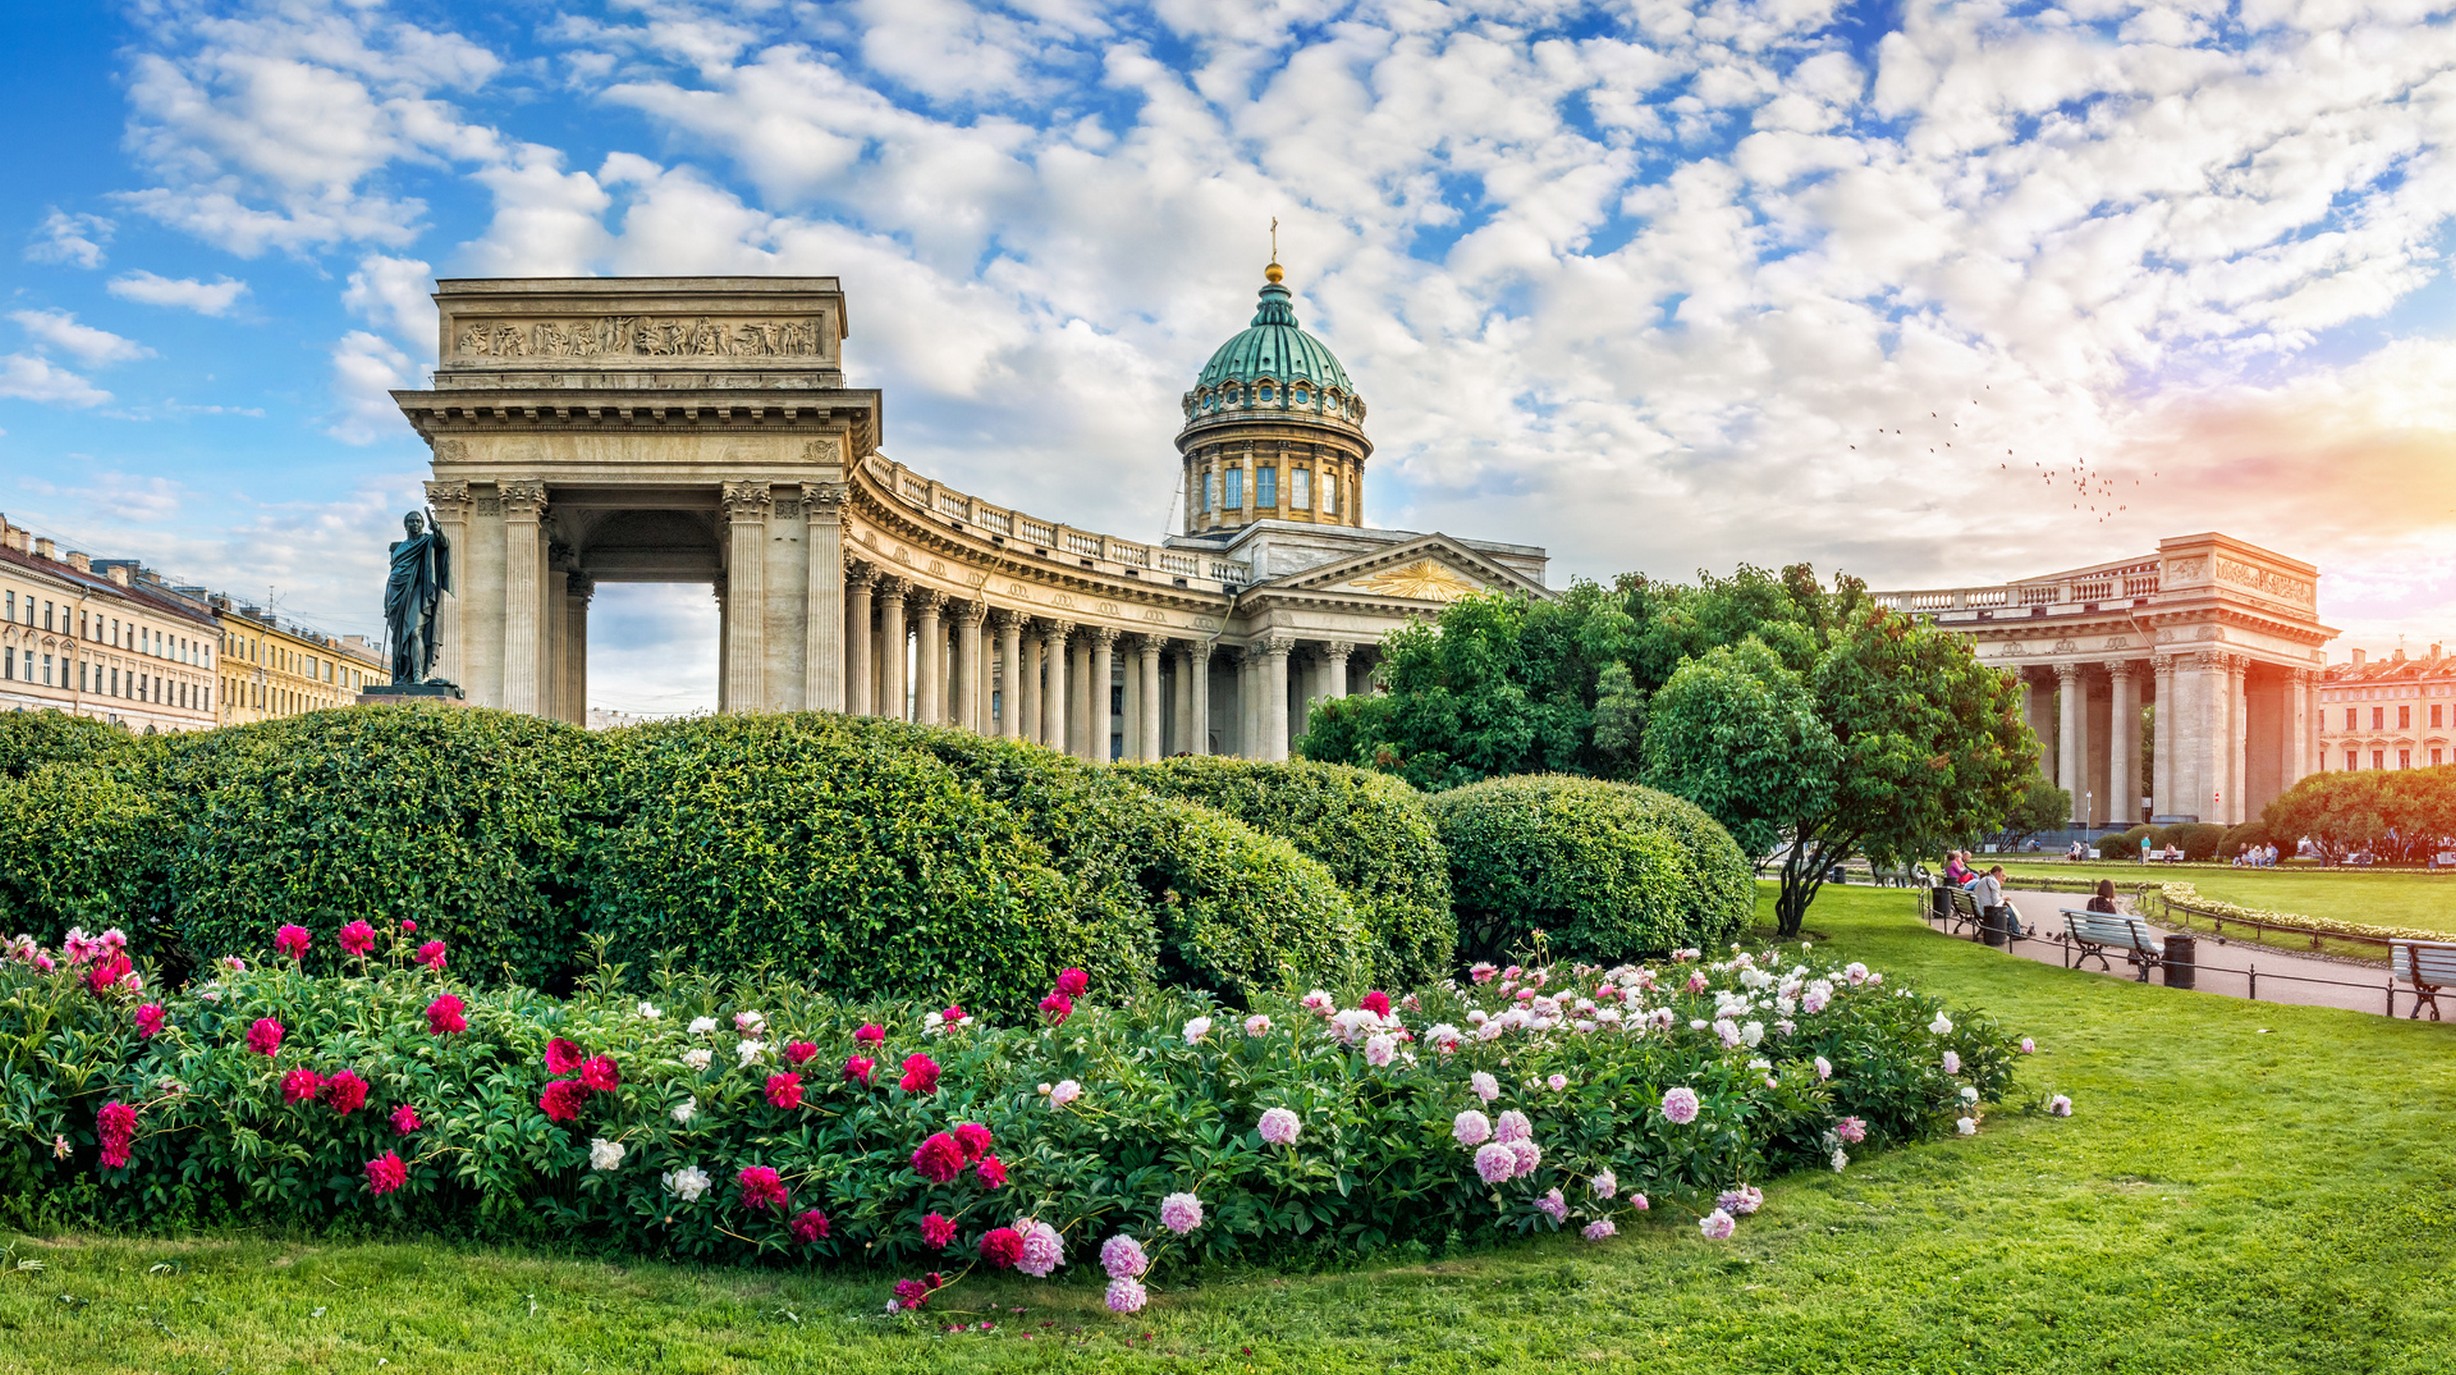 St. Petersburg, Kazan Kathedraal